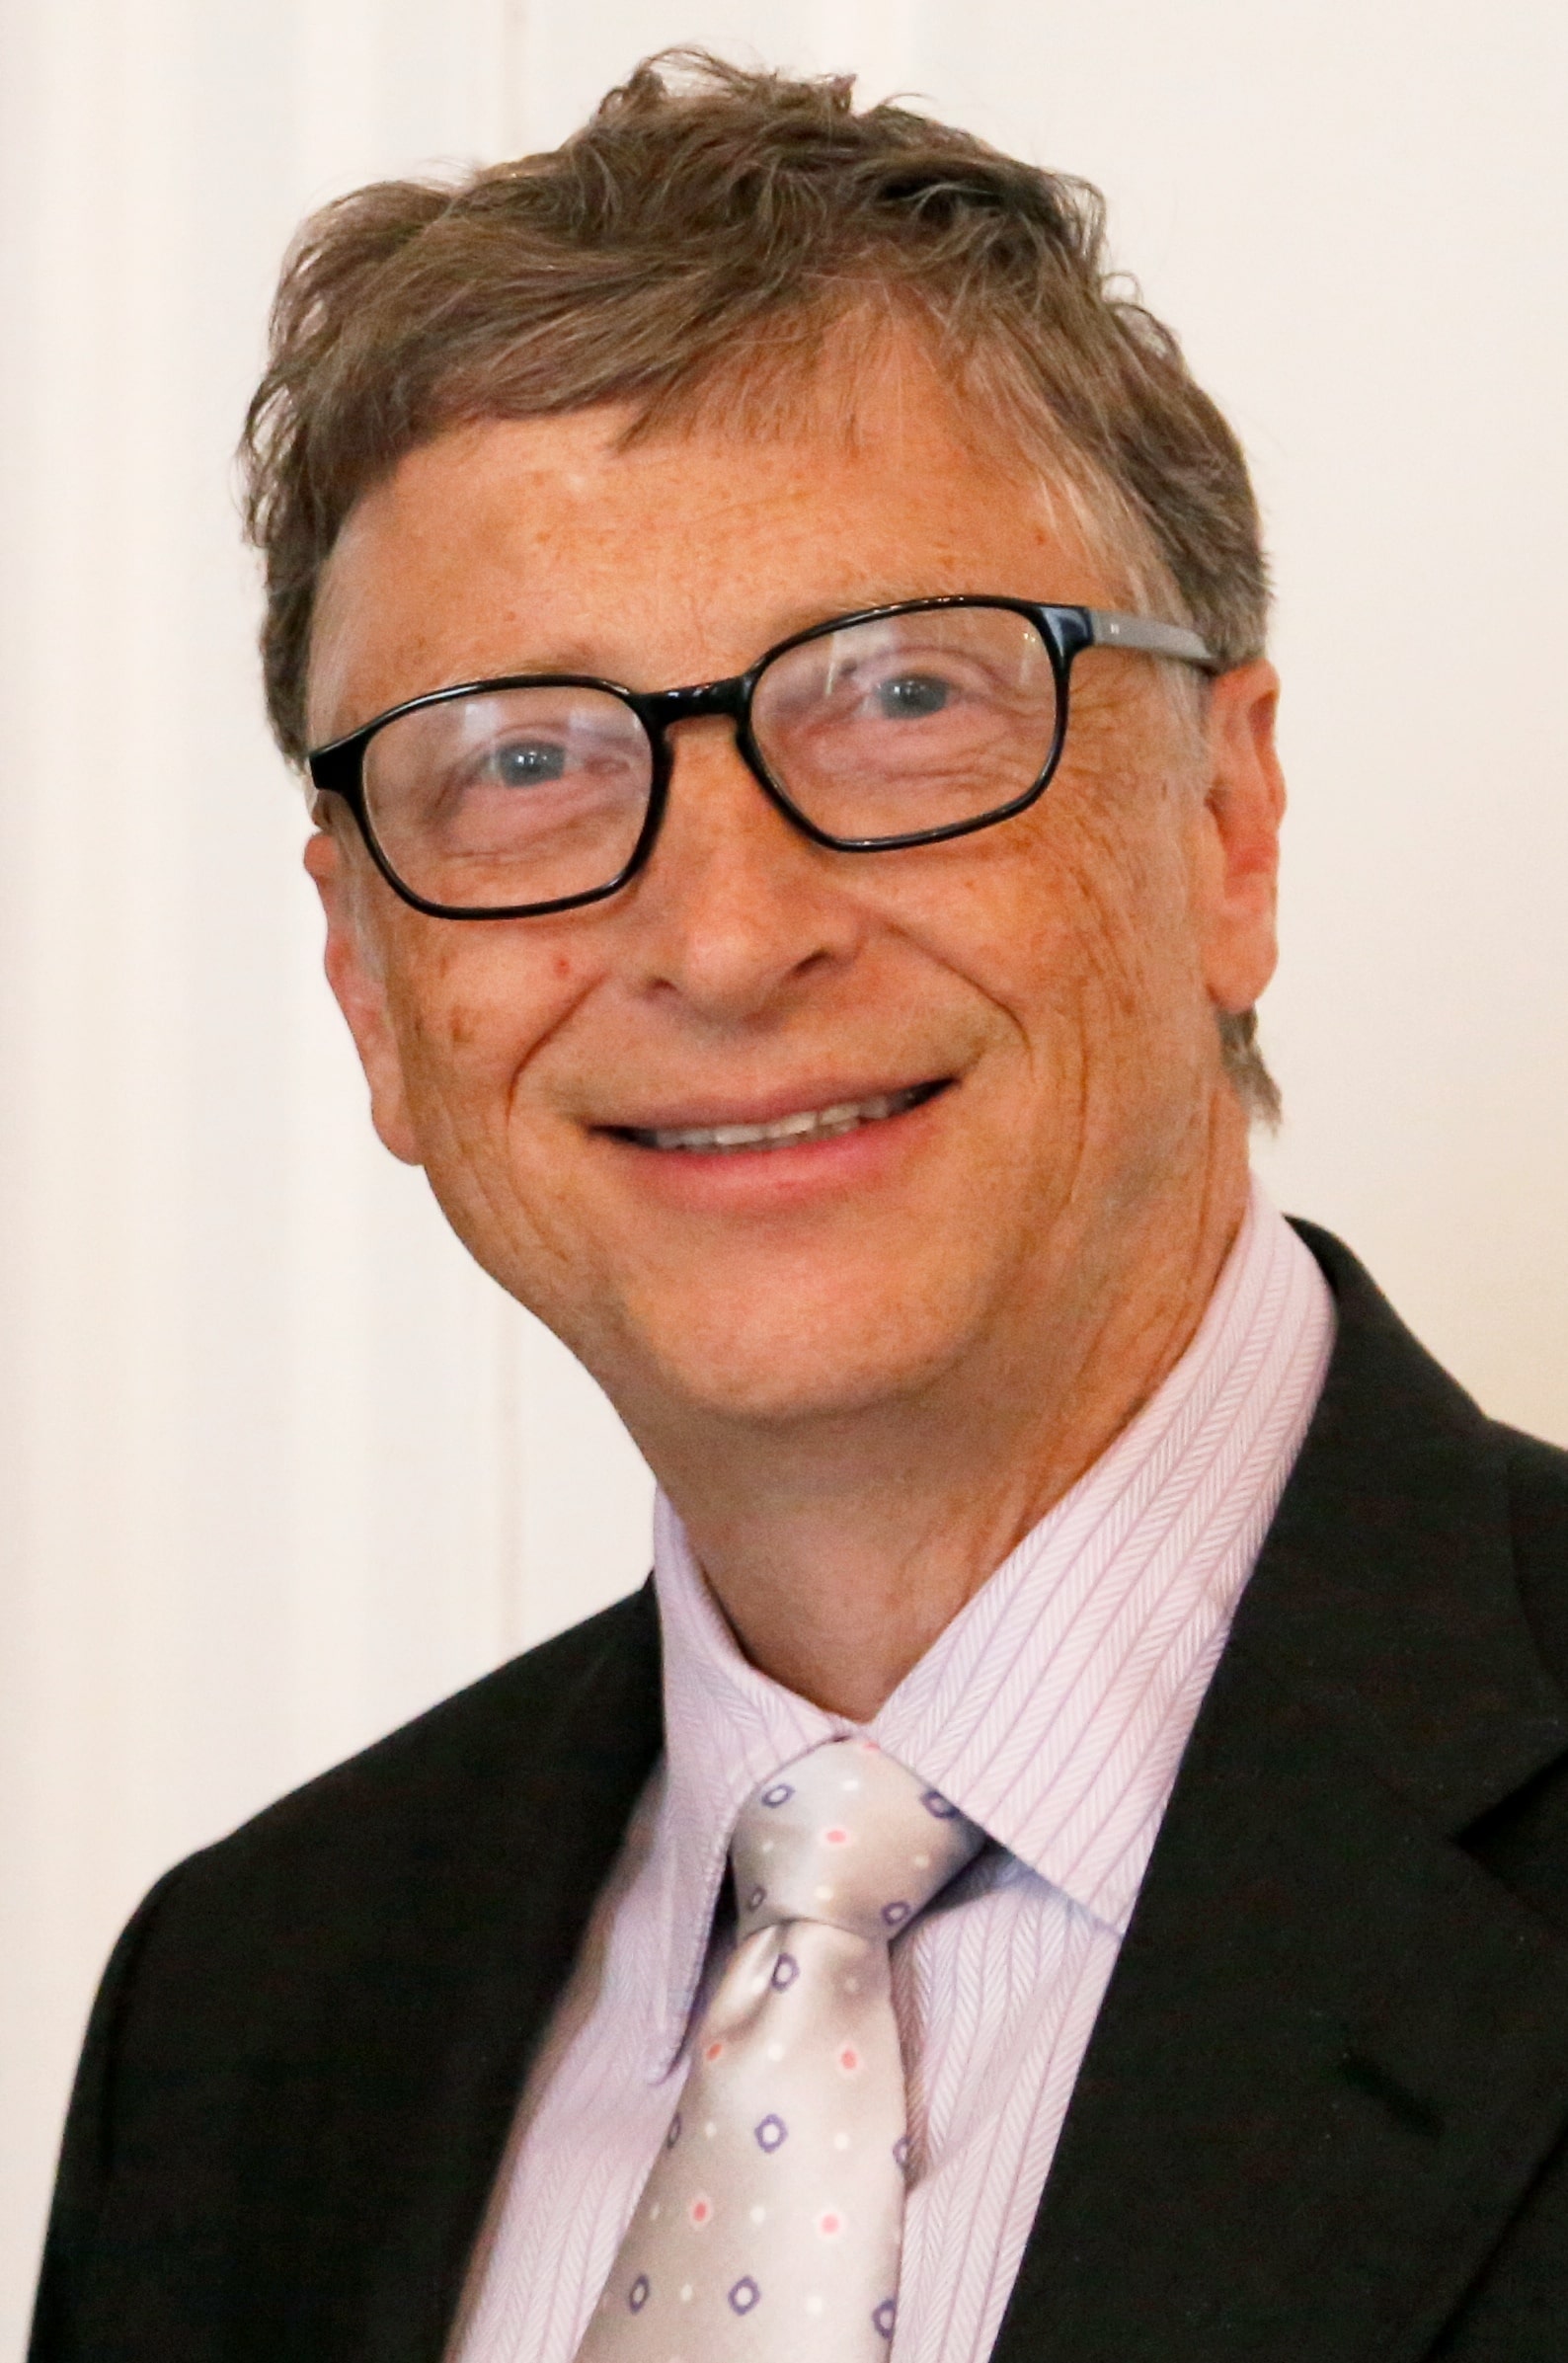 Bill Gates July 2014